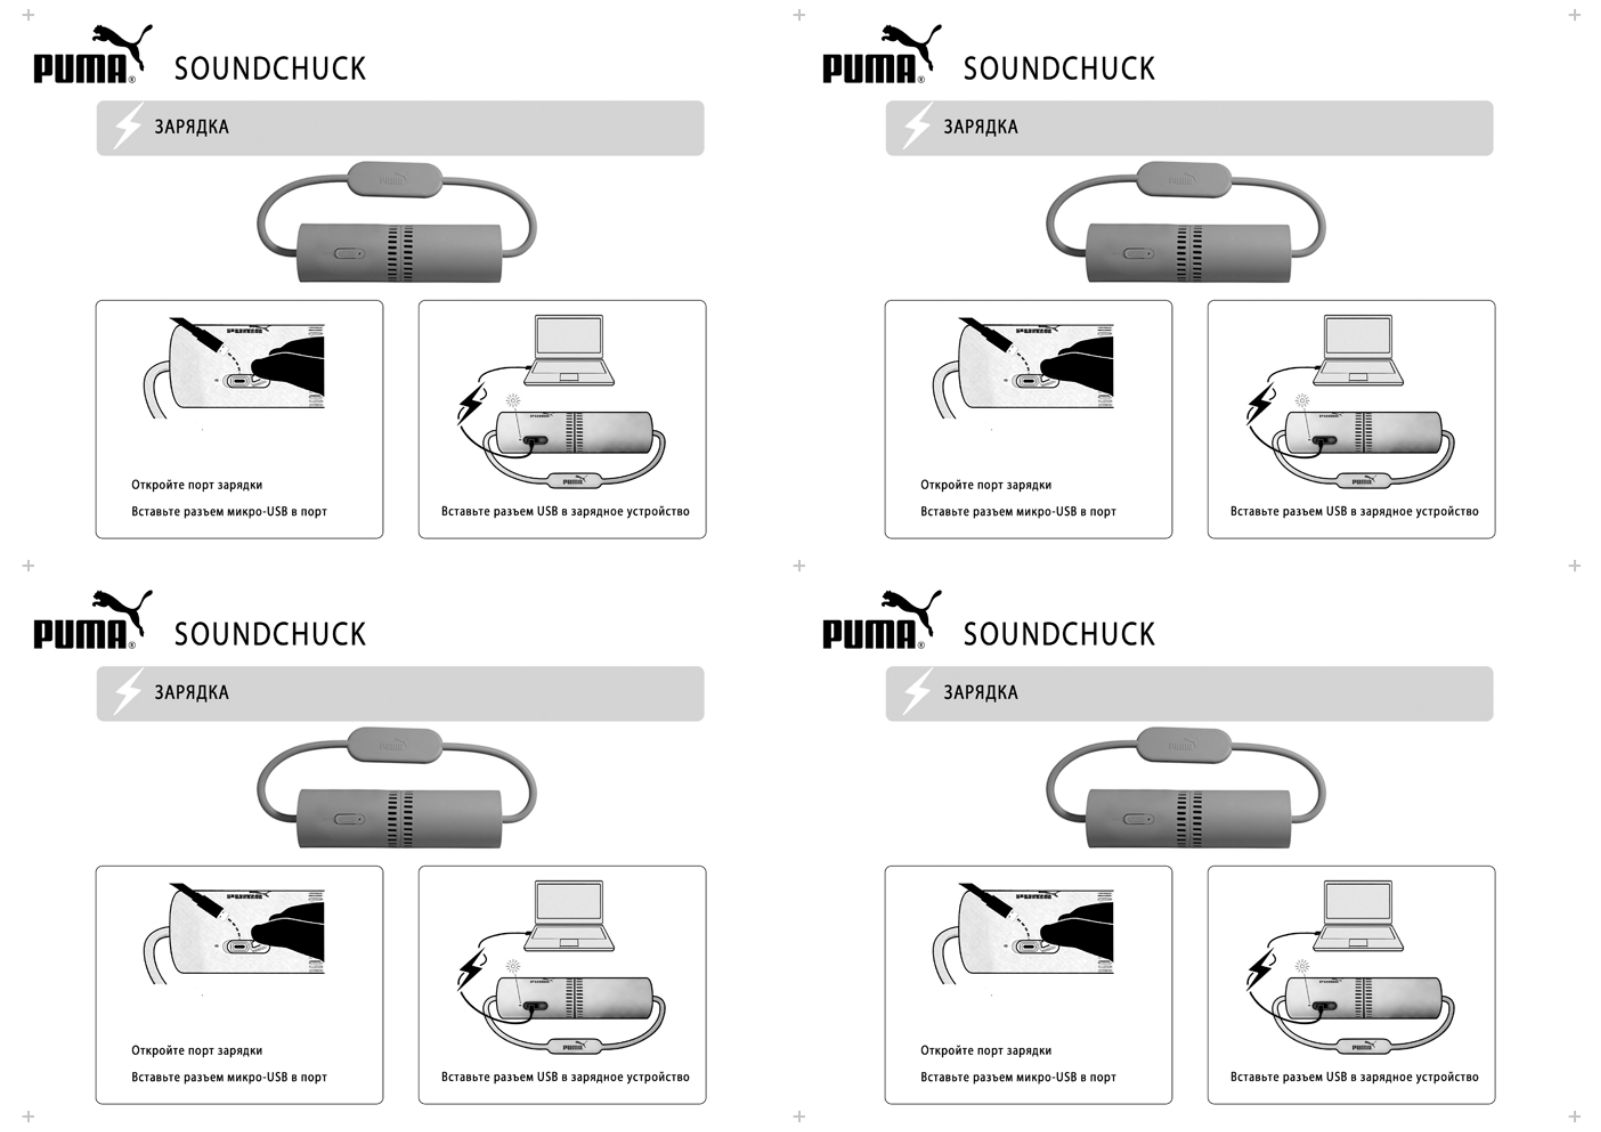 Puma Soundchuck User Manual